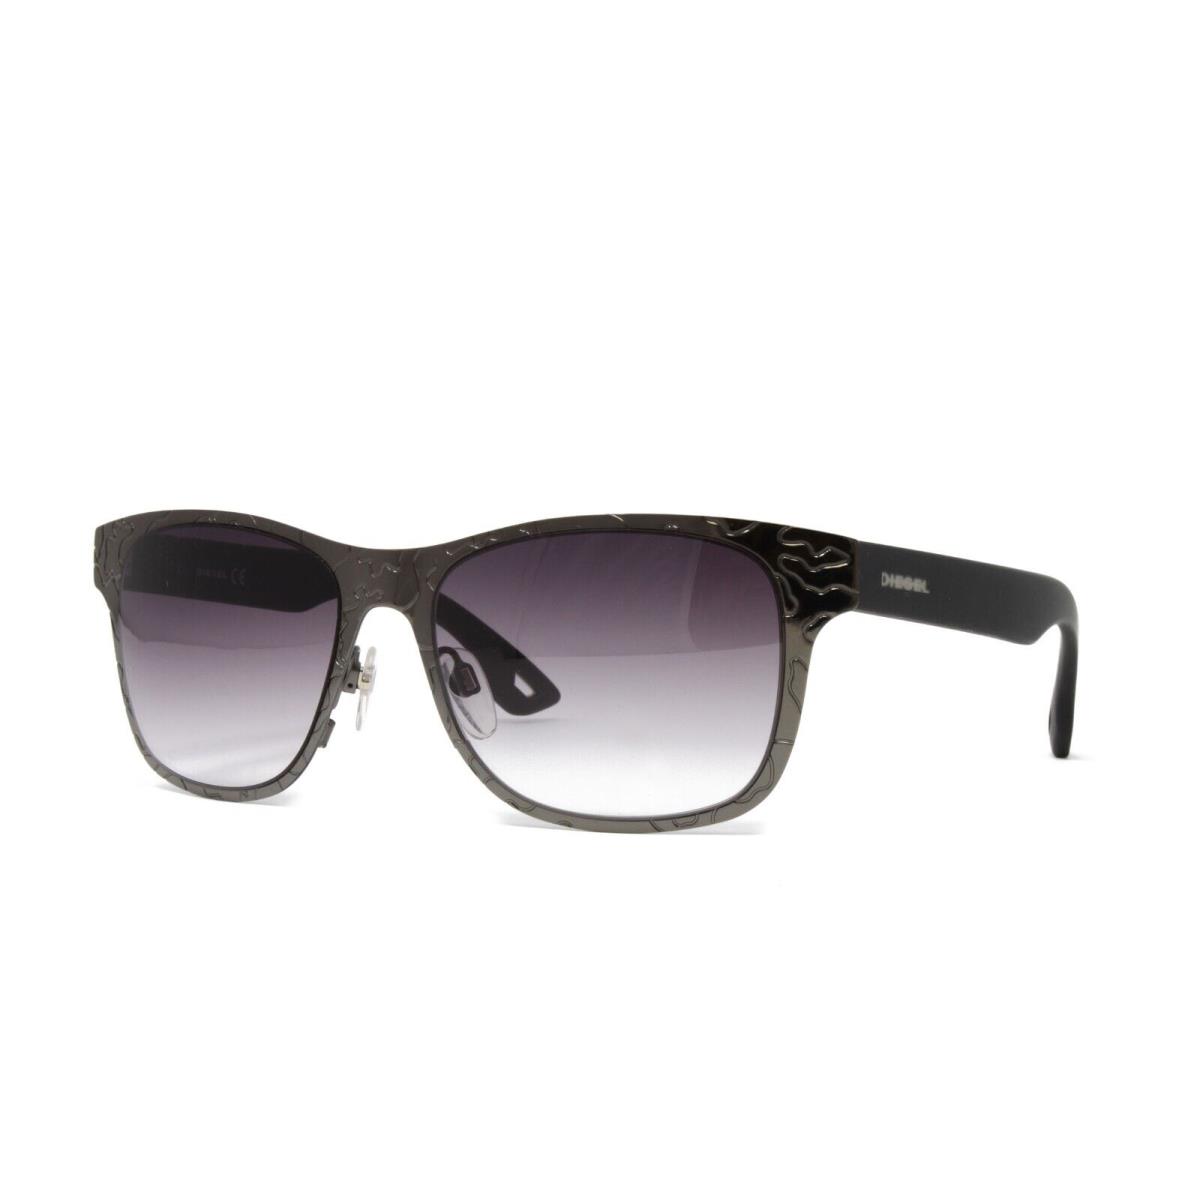 Diesel Women`s Sunglasses DL0010 08B Dark Gunmetal Black 55mm Gray Gradient Lens